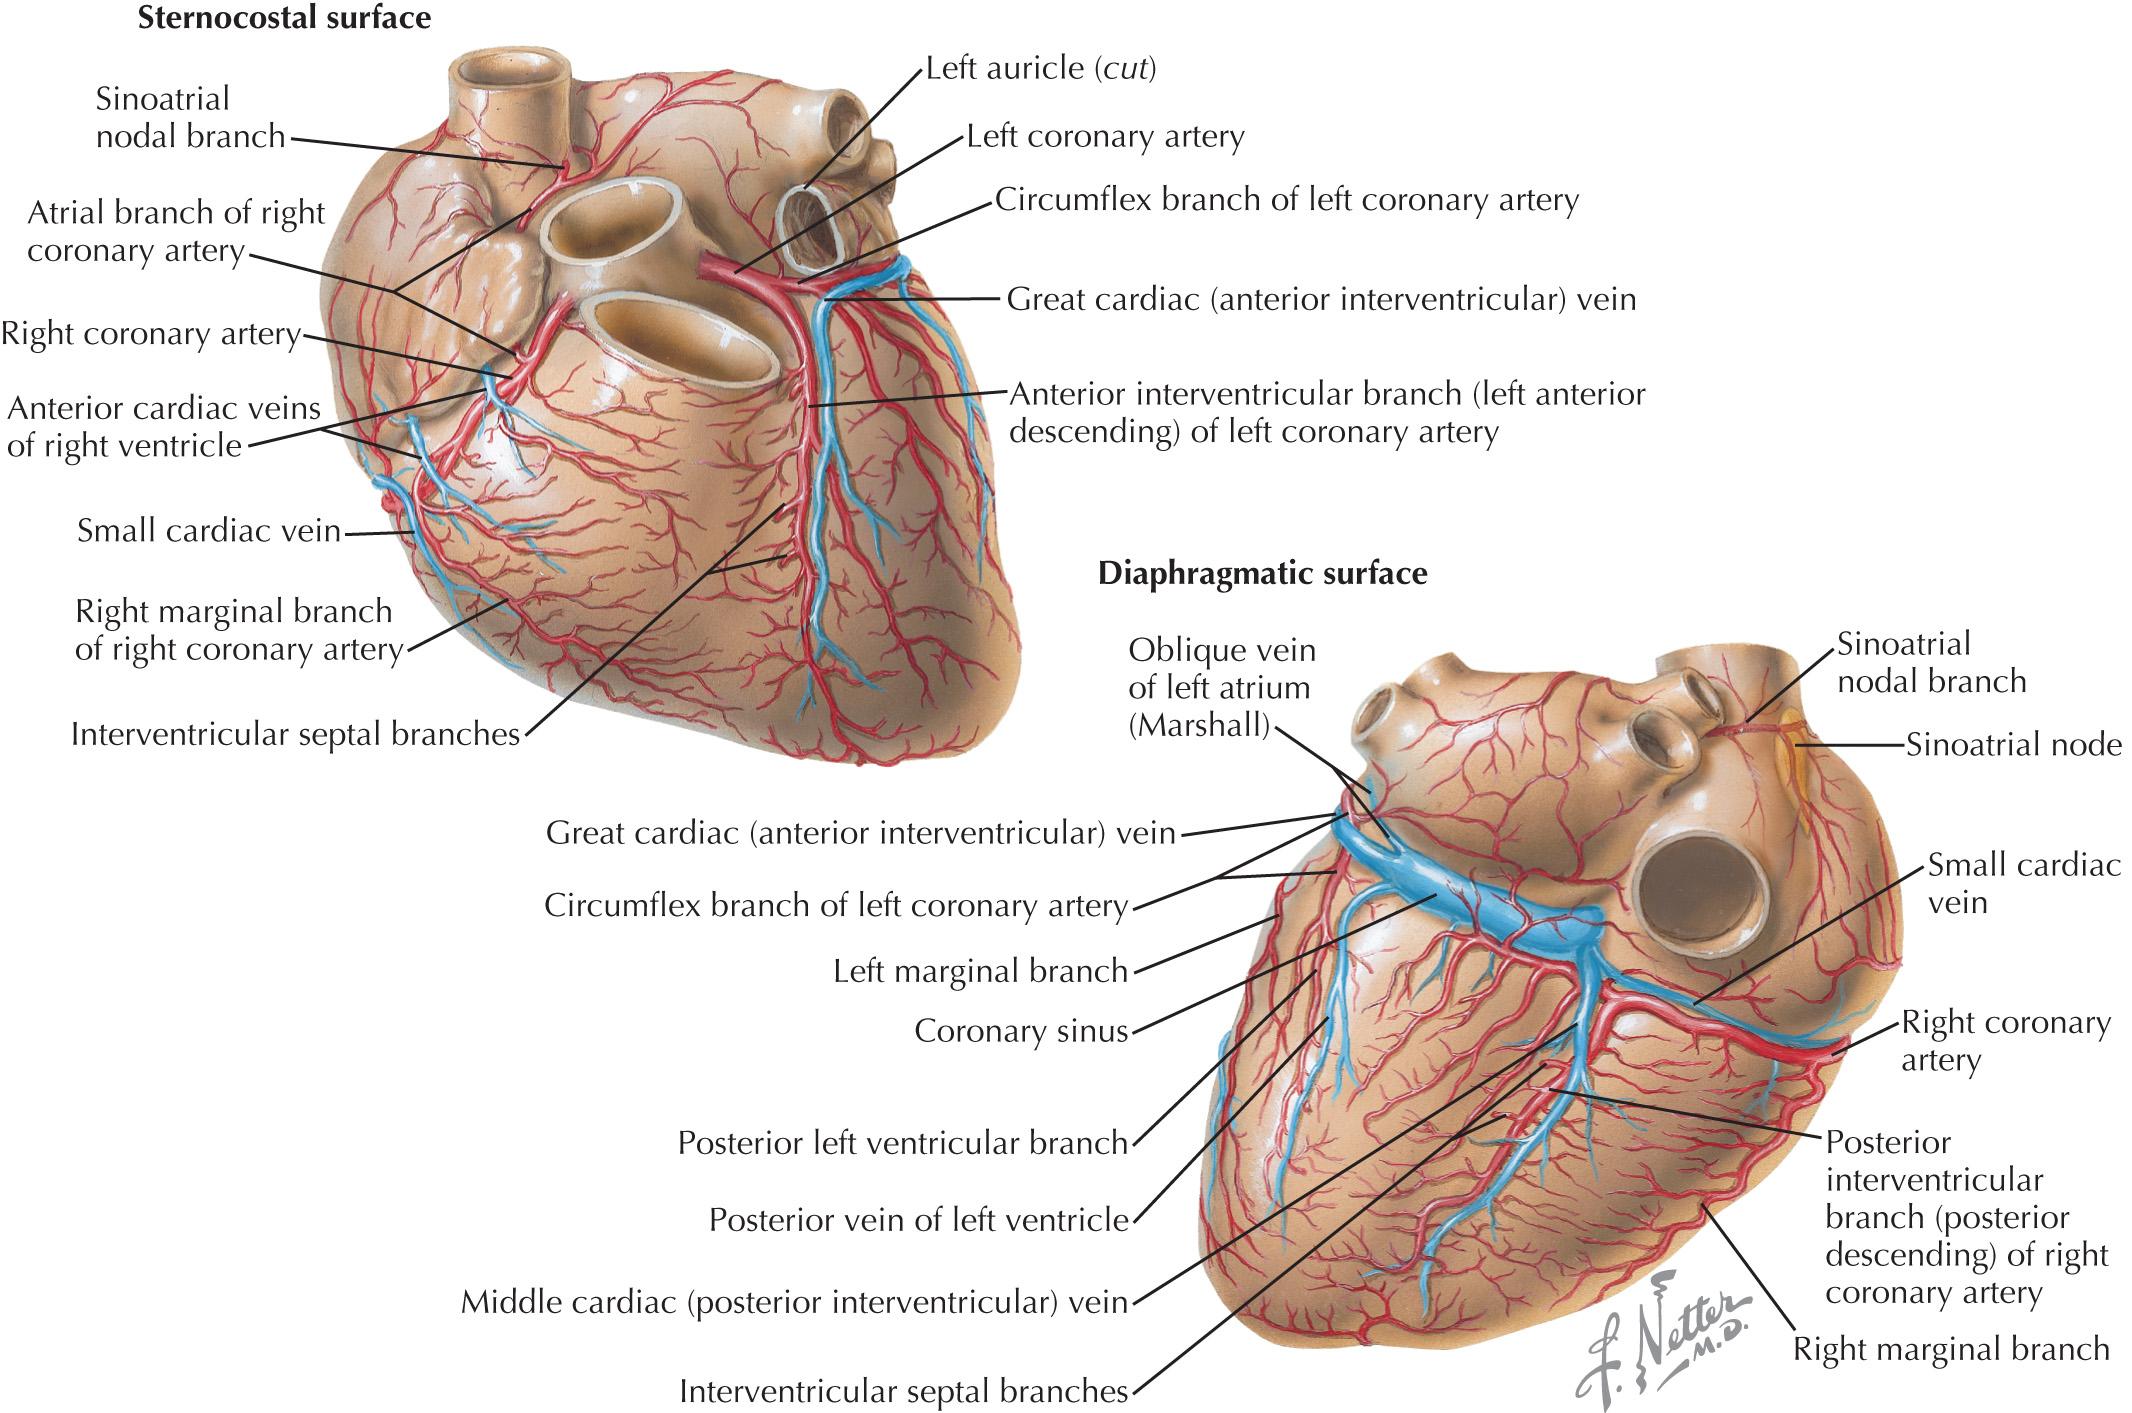 FIG 12.1, Coronary arteries and cardiac veins.